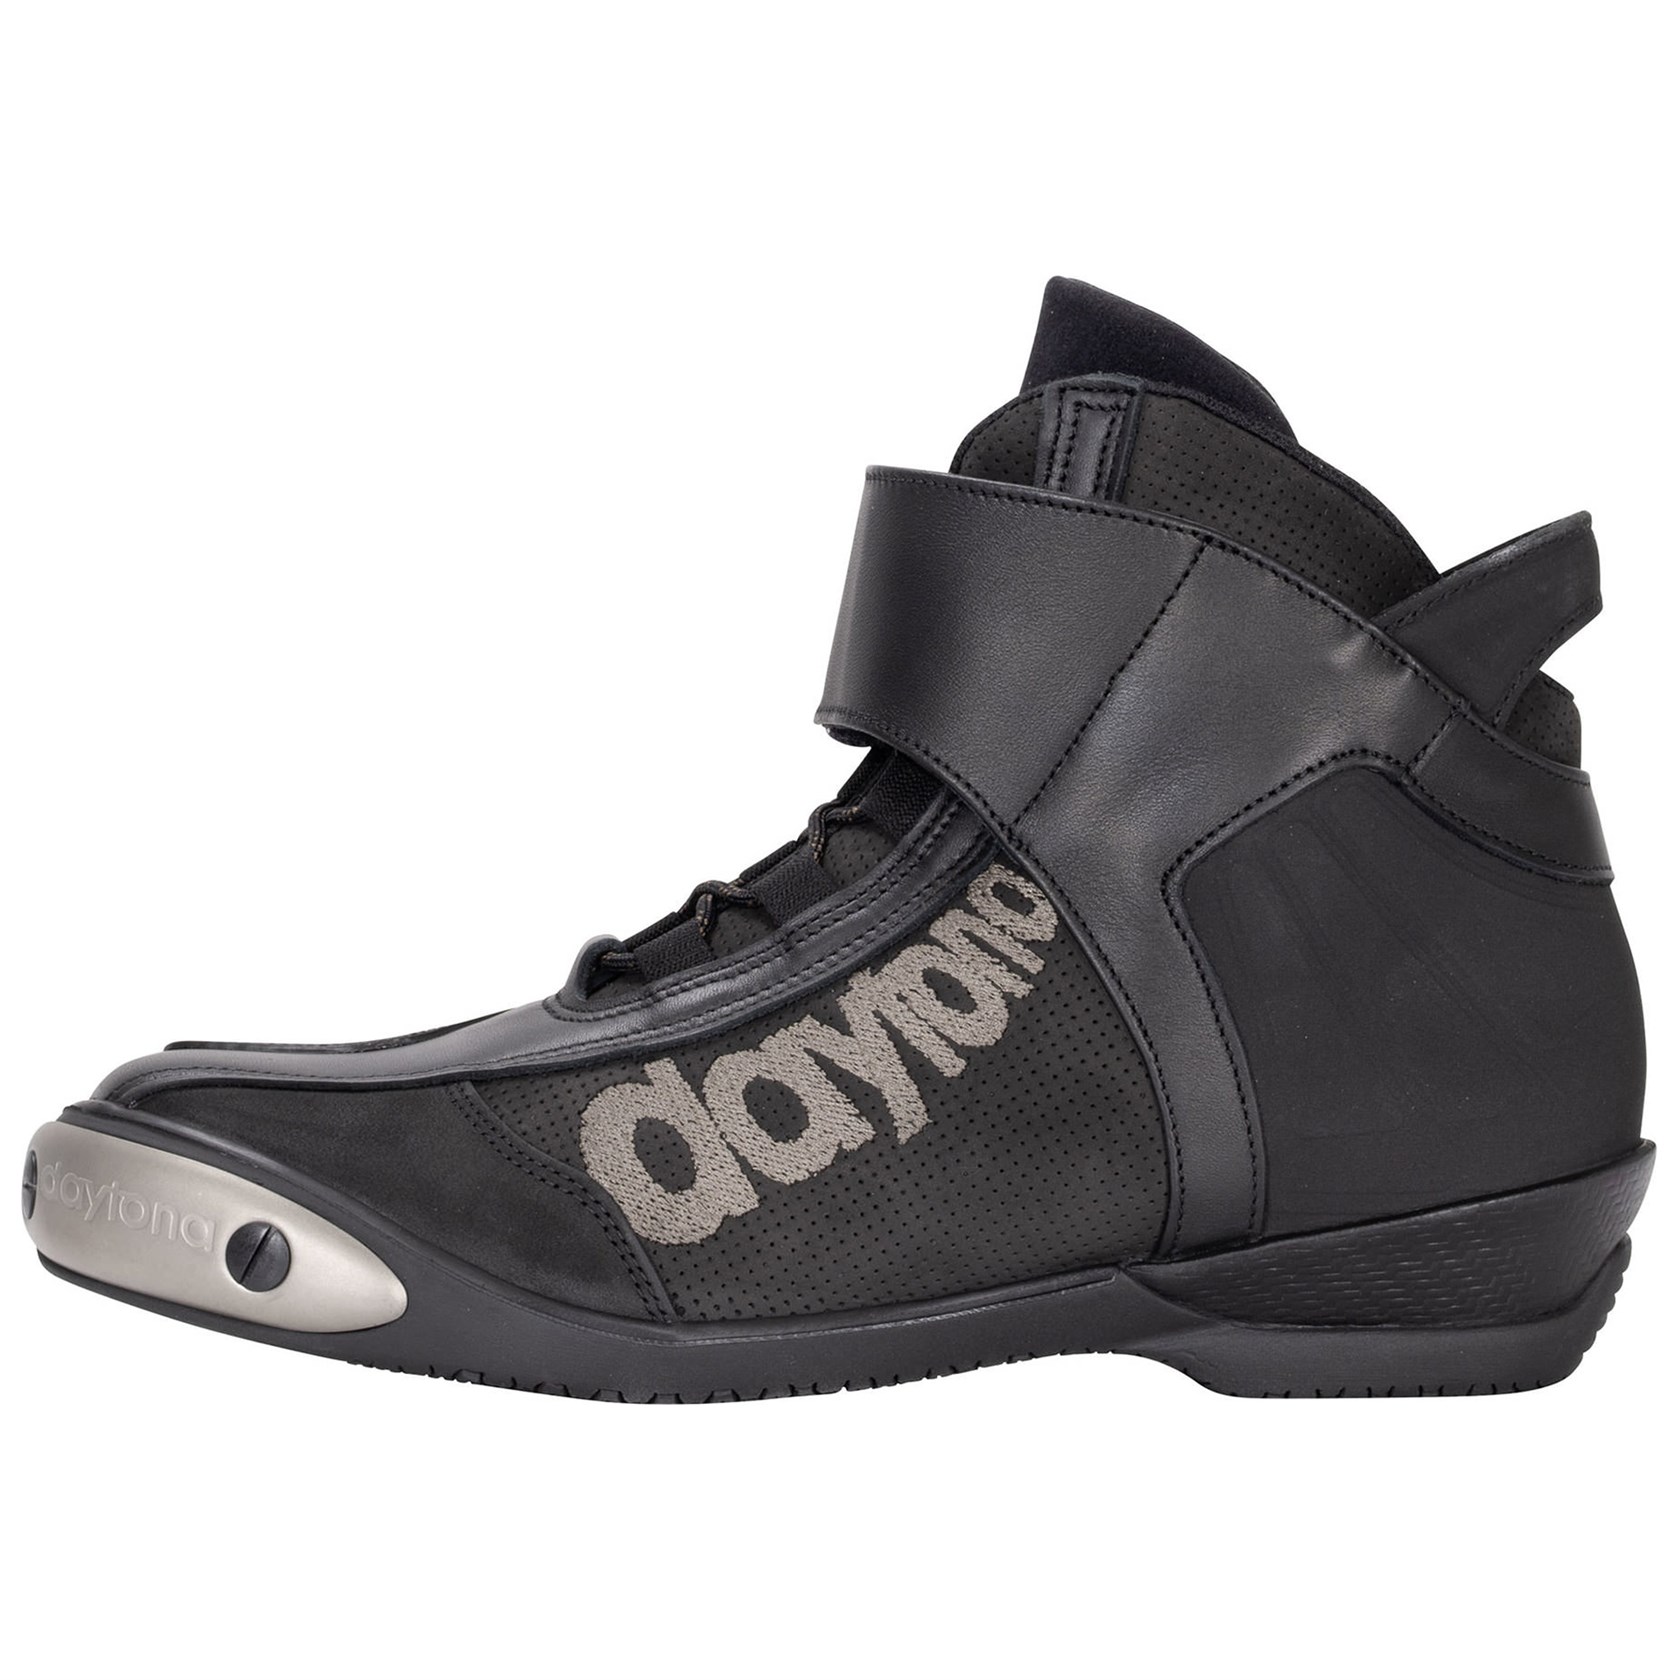 Daytona AC Pro boots in black